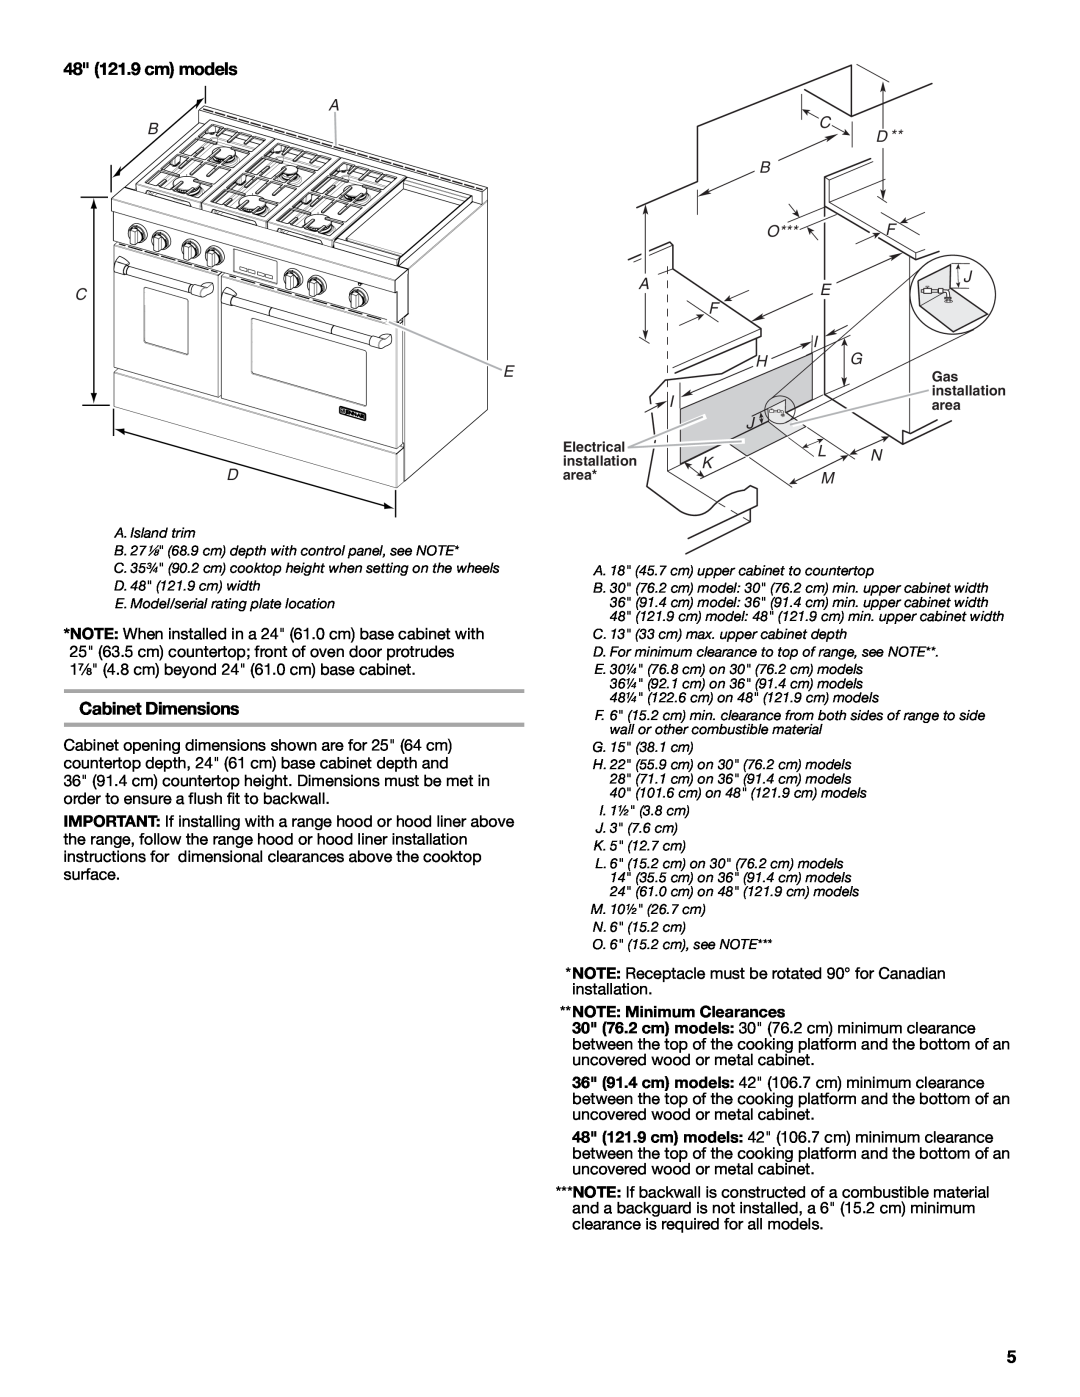 Jenn-Air W10394575A installation instructions 48 121.9 cm models, Cabinet Dimensions, NOTE Minimum Clearances 